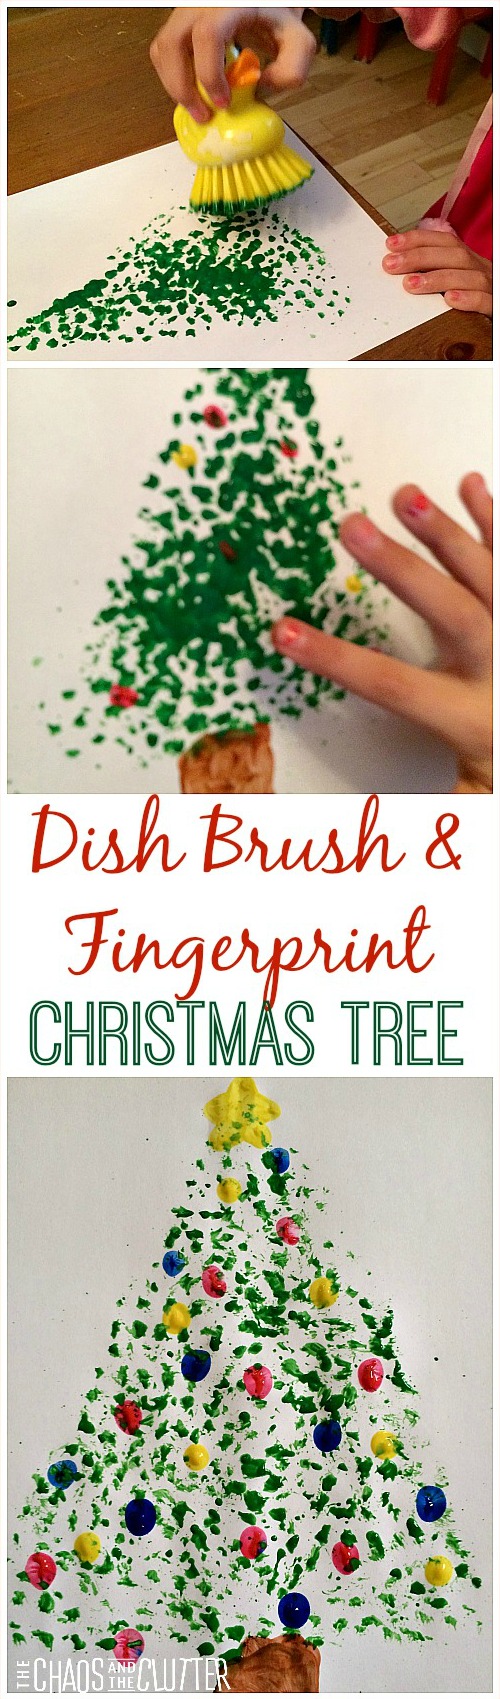 Dish Brush and Fingerprint Painted Christmas Tree - so cute!